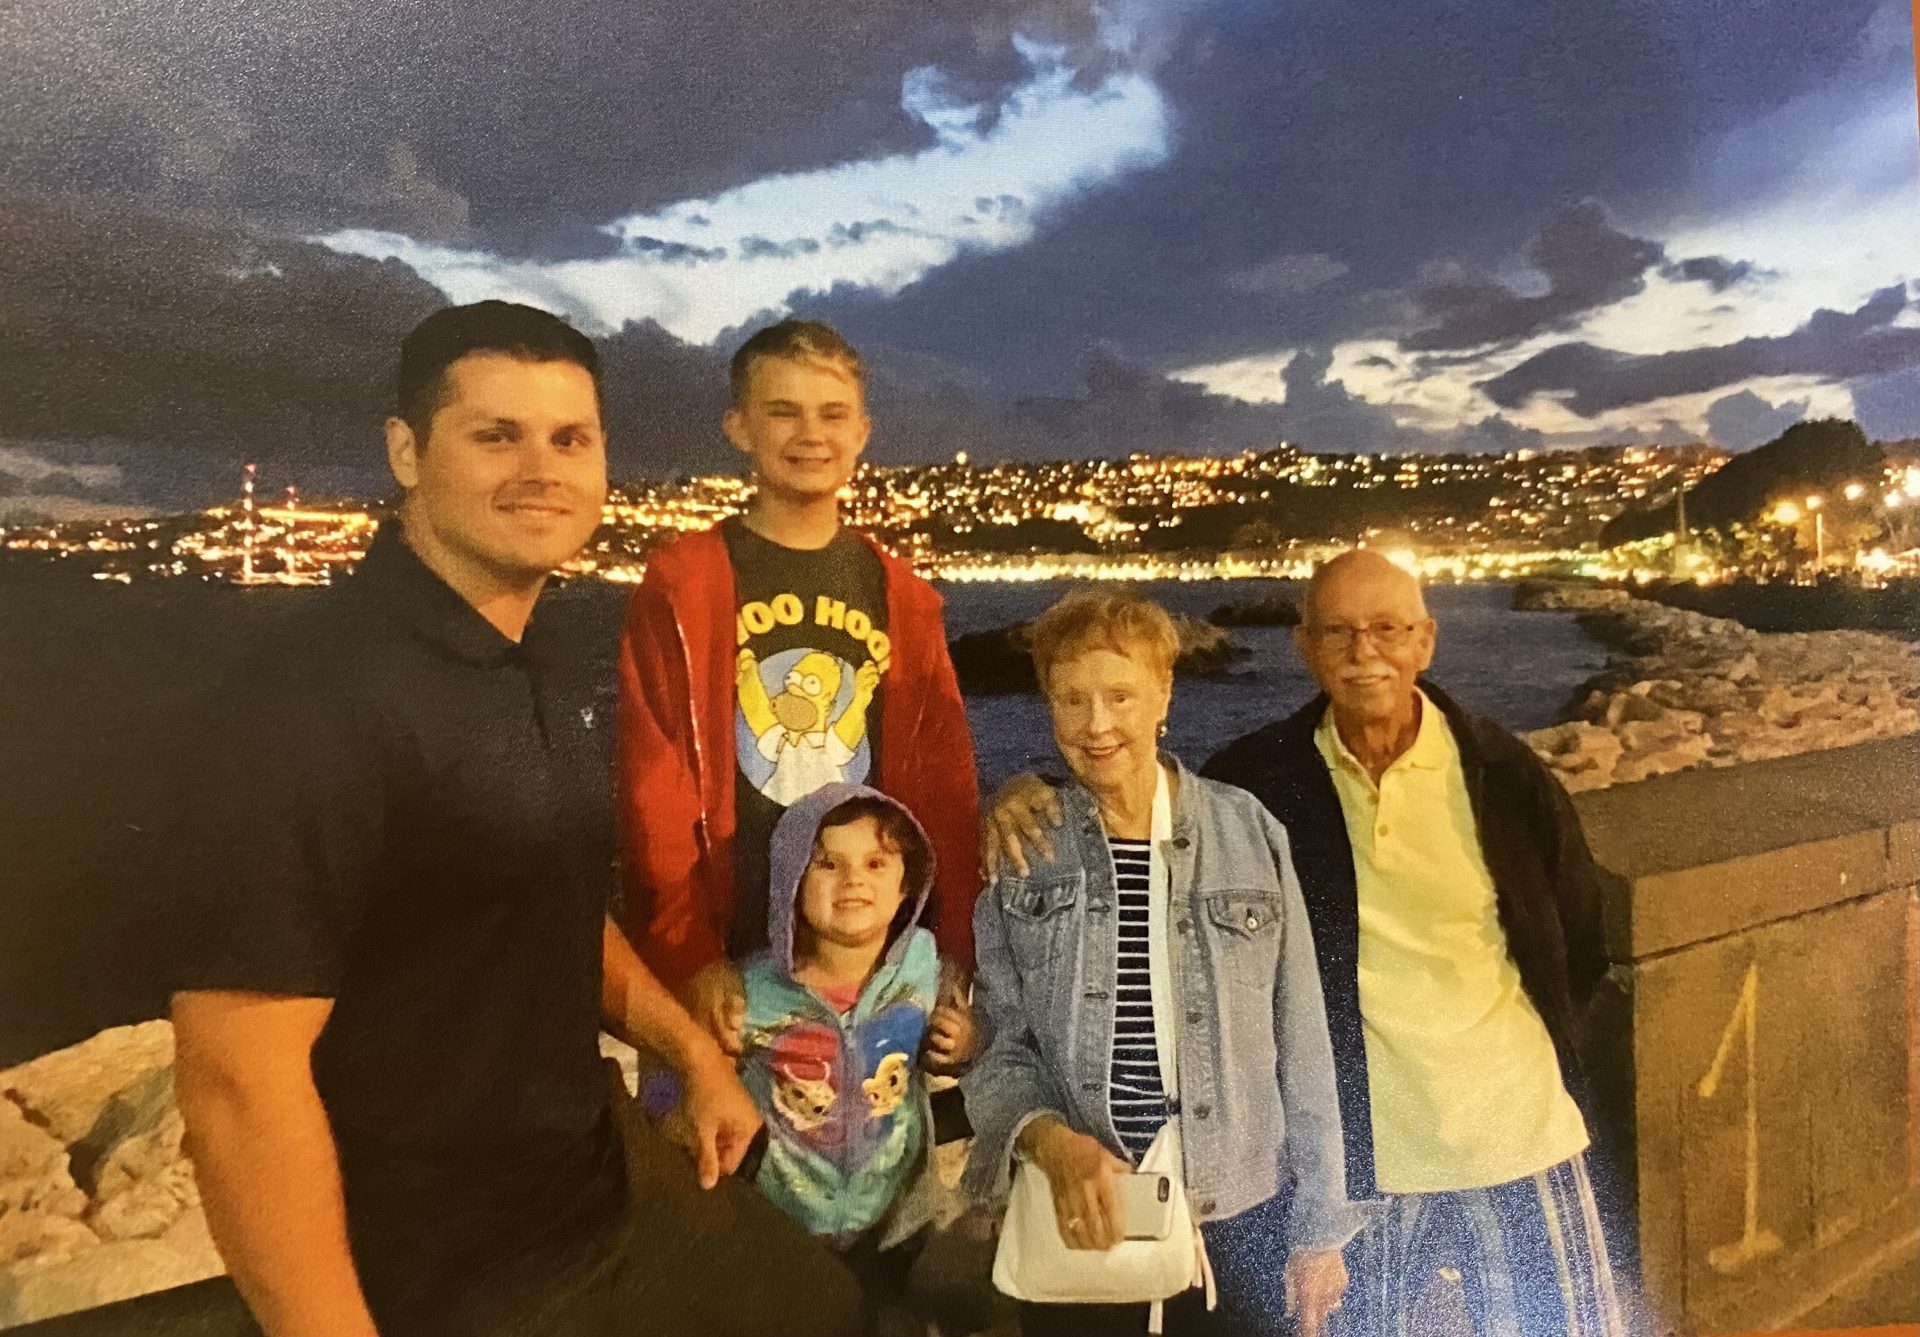 The Bay of Naples, Italy- Grandpa Bob and Grandma Edna visit